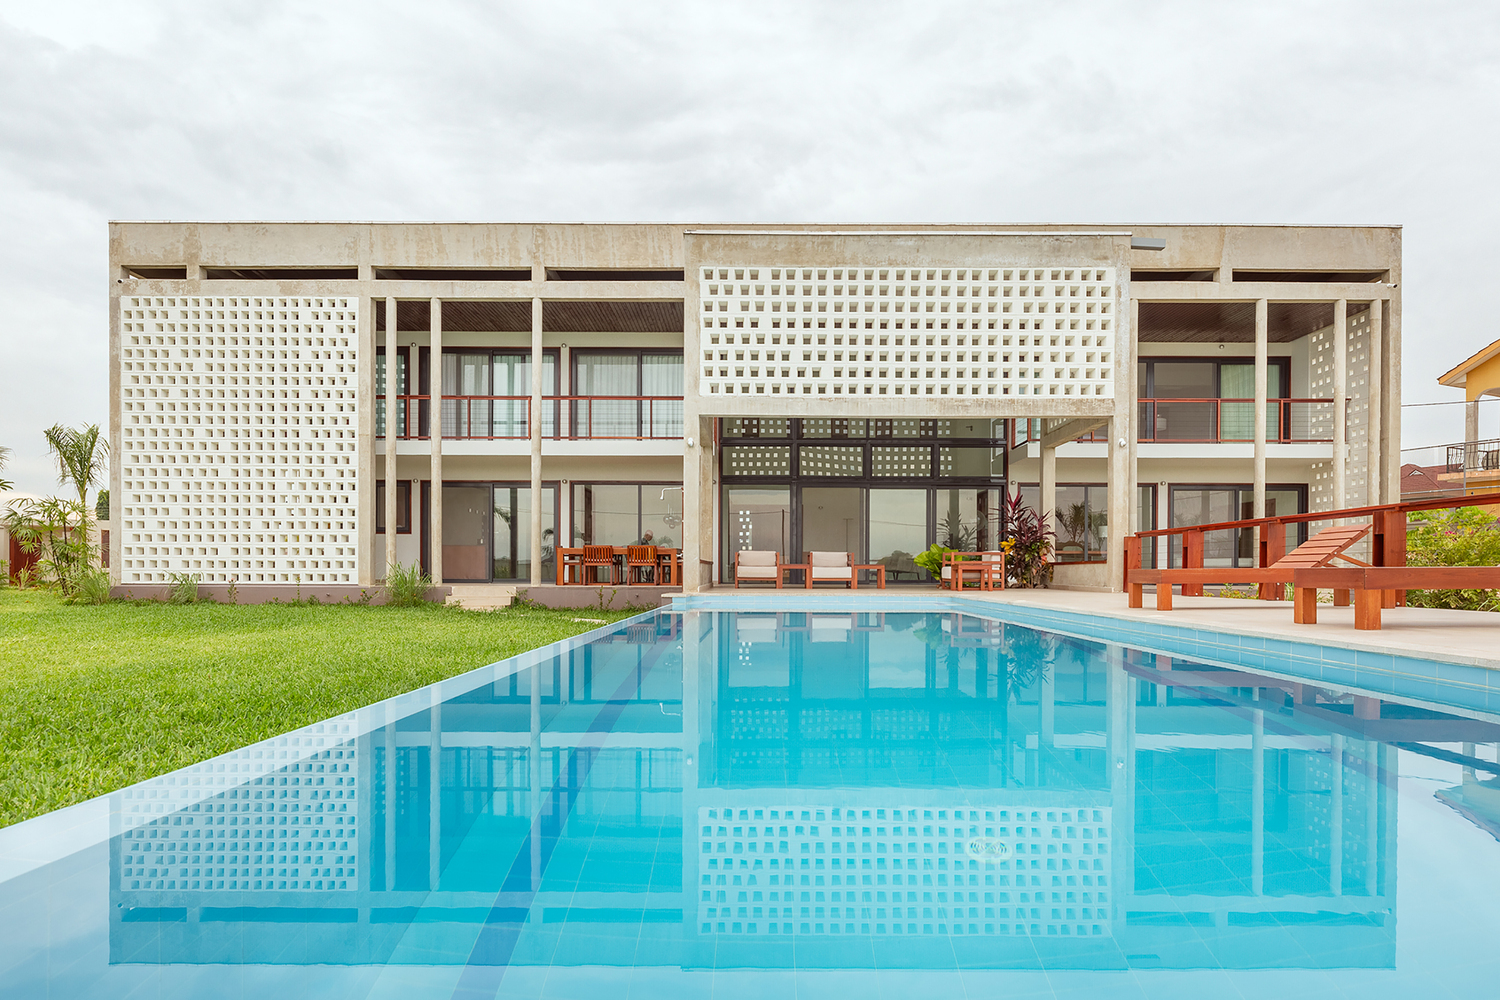 Archisearch Εξωτική λιτότητα - To Mbweni house με κουφώματα Aluminco, στο Dar es-Salam της Τανζανίας. | FBW Architecten Netherlands